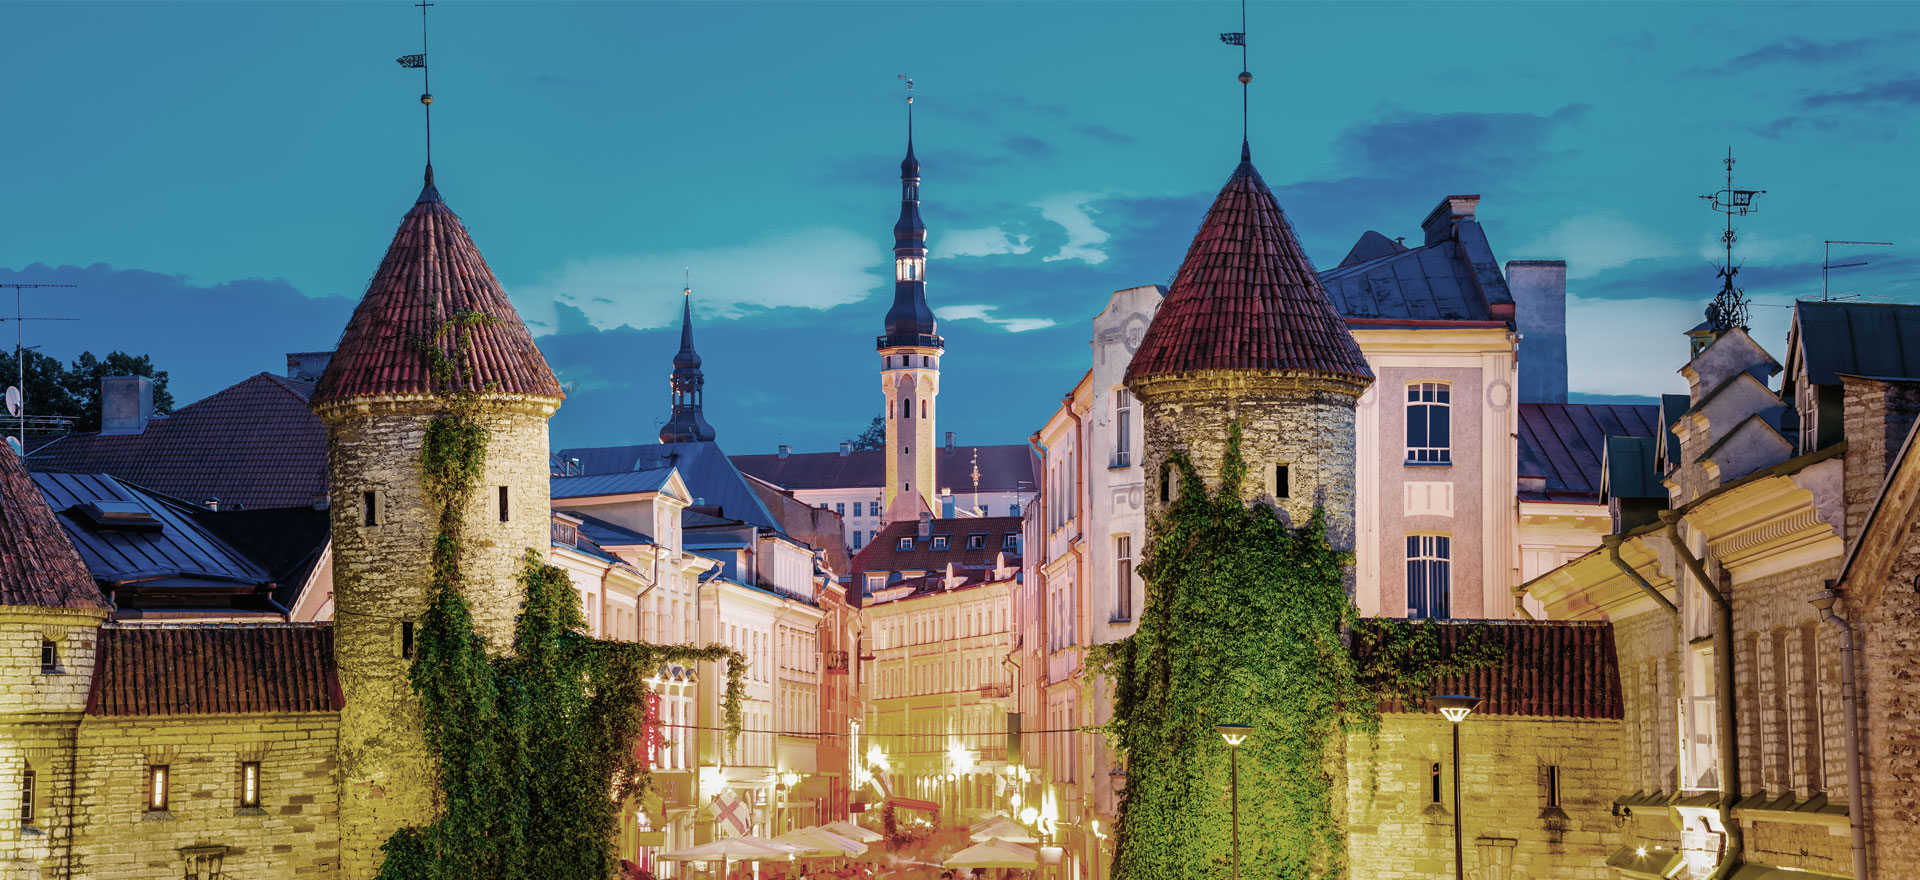 Tallinn by night - Estonia Holidays and Tours